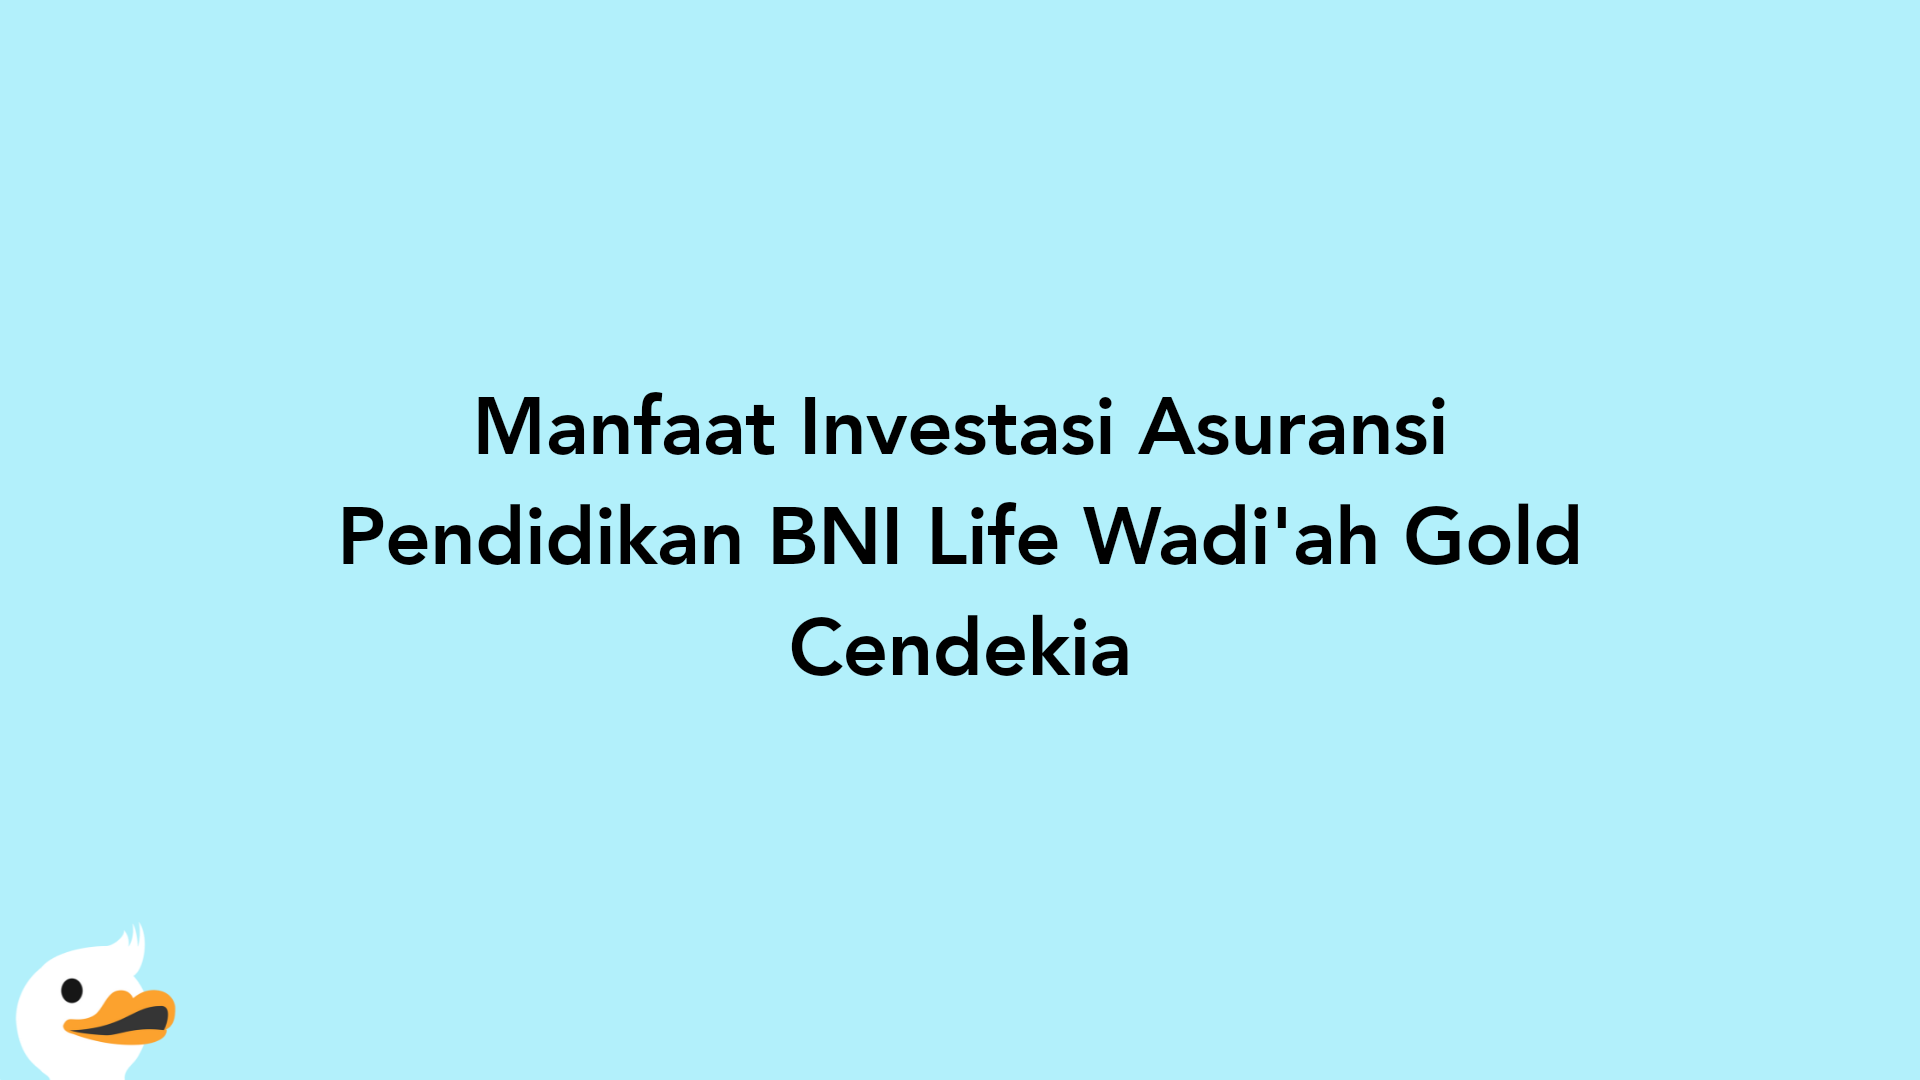 Manfaat Investasi Asuransi Pendidikan BNI Life Wadi'ah Gold Cendekia